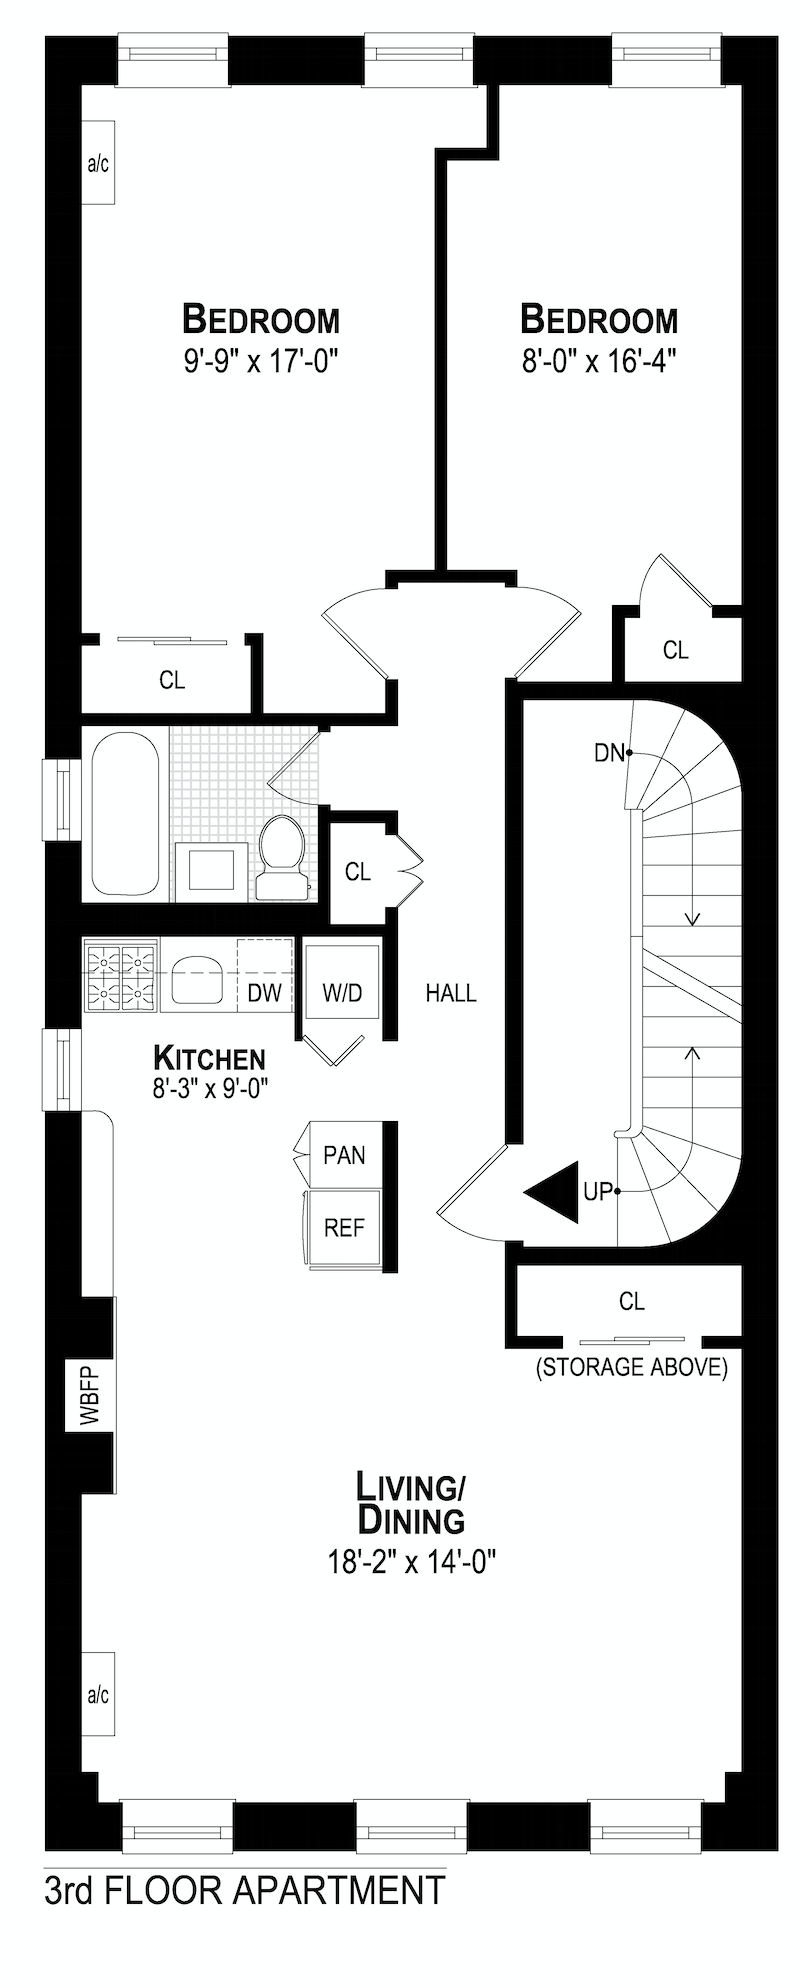 Floorplan for 110 West 15th Street, 3